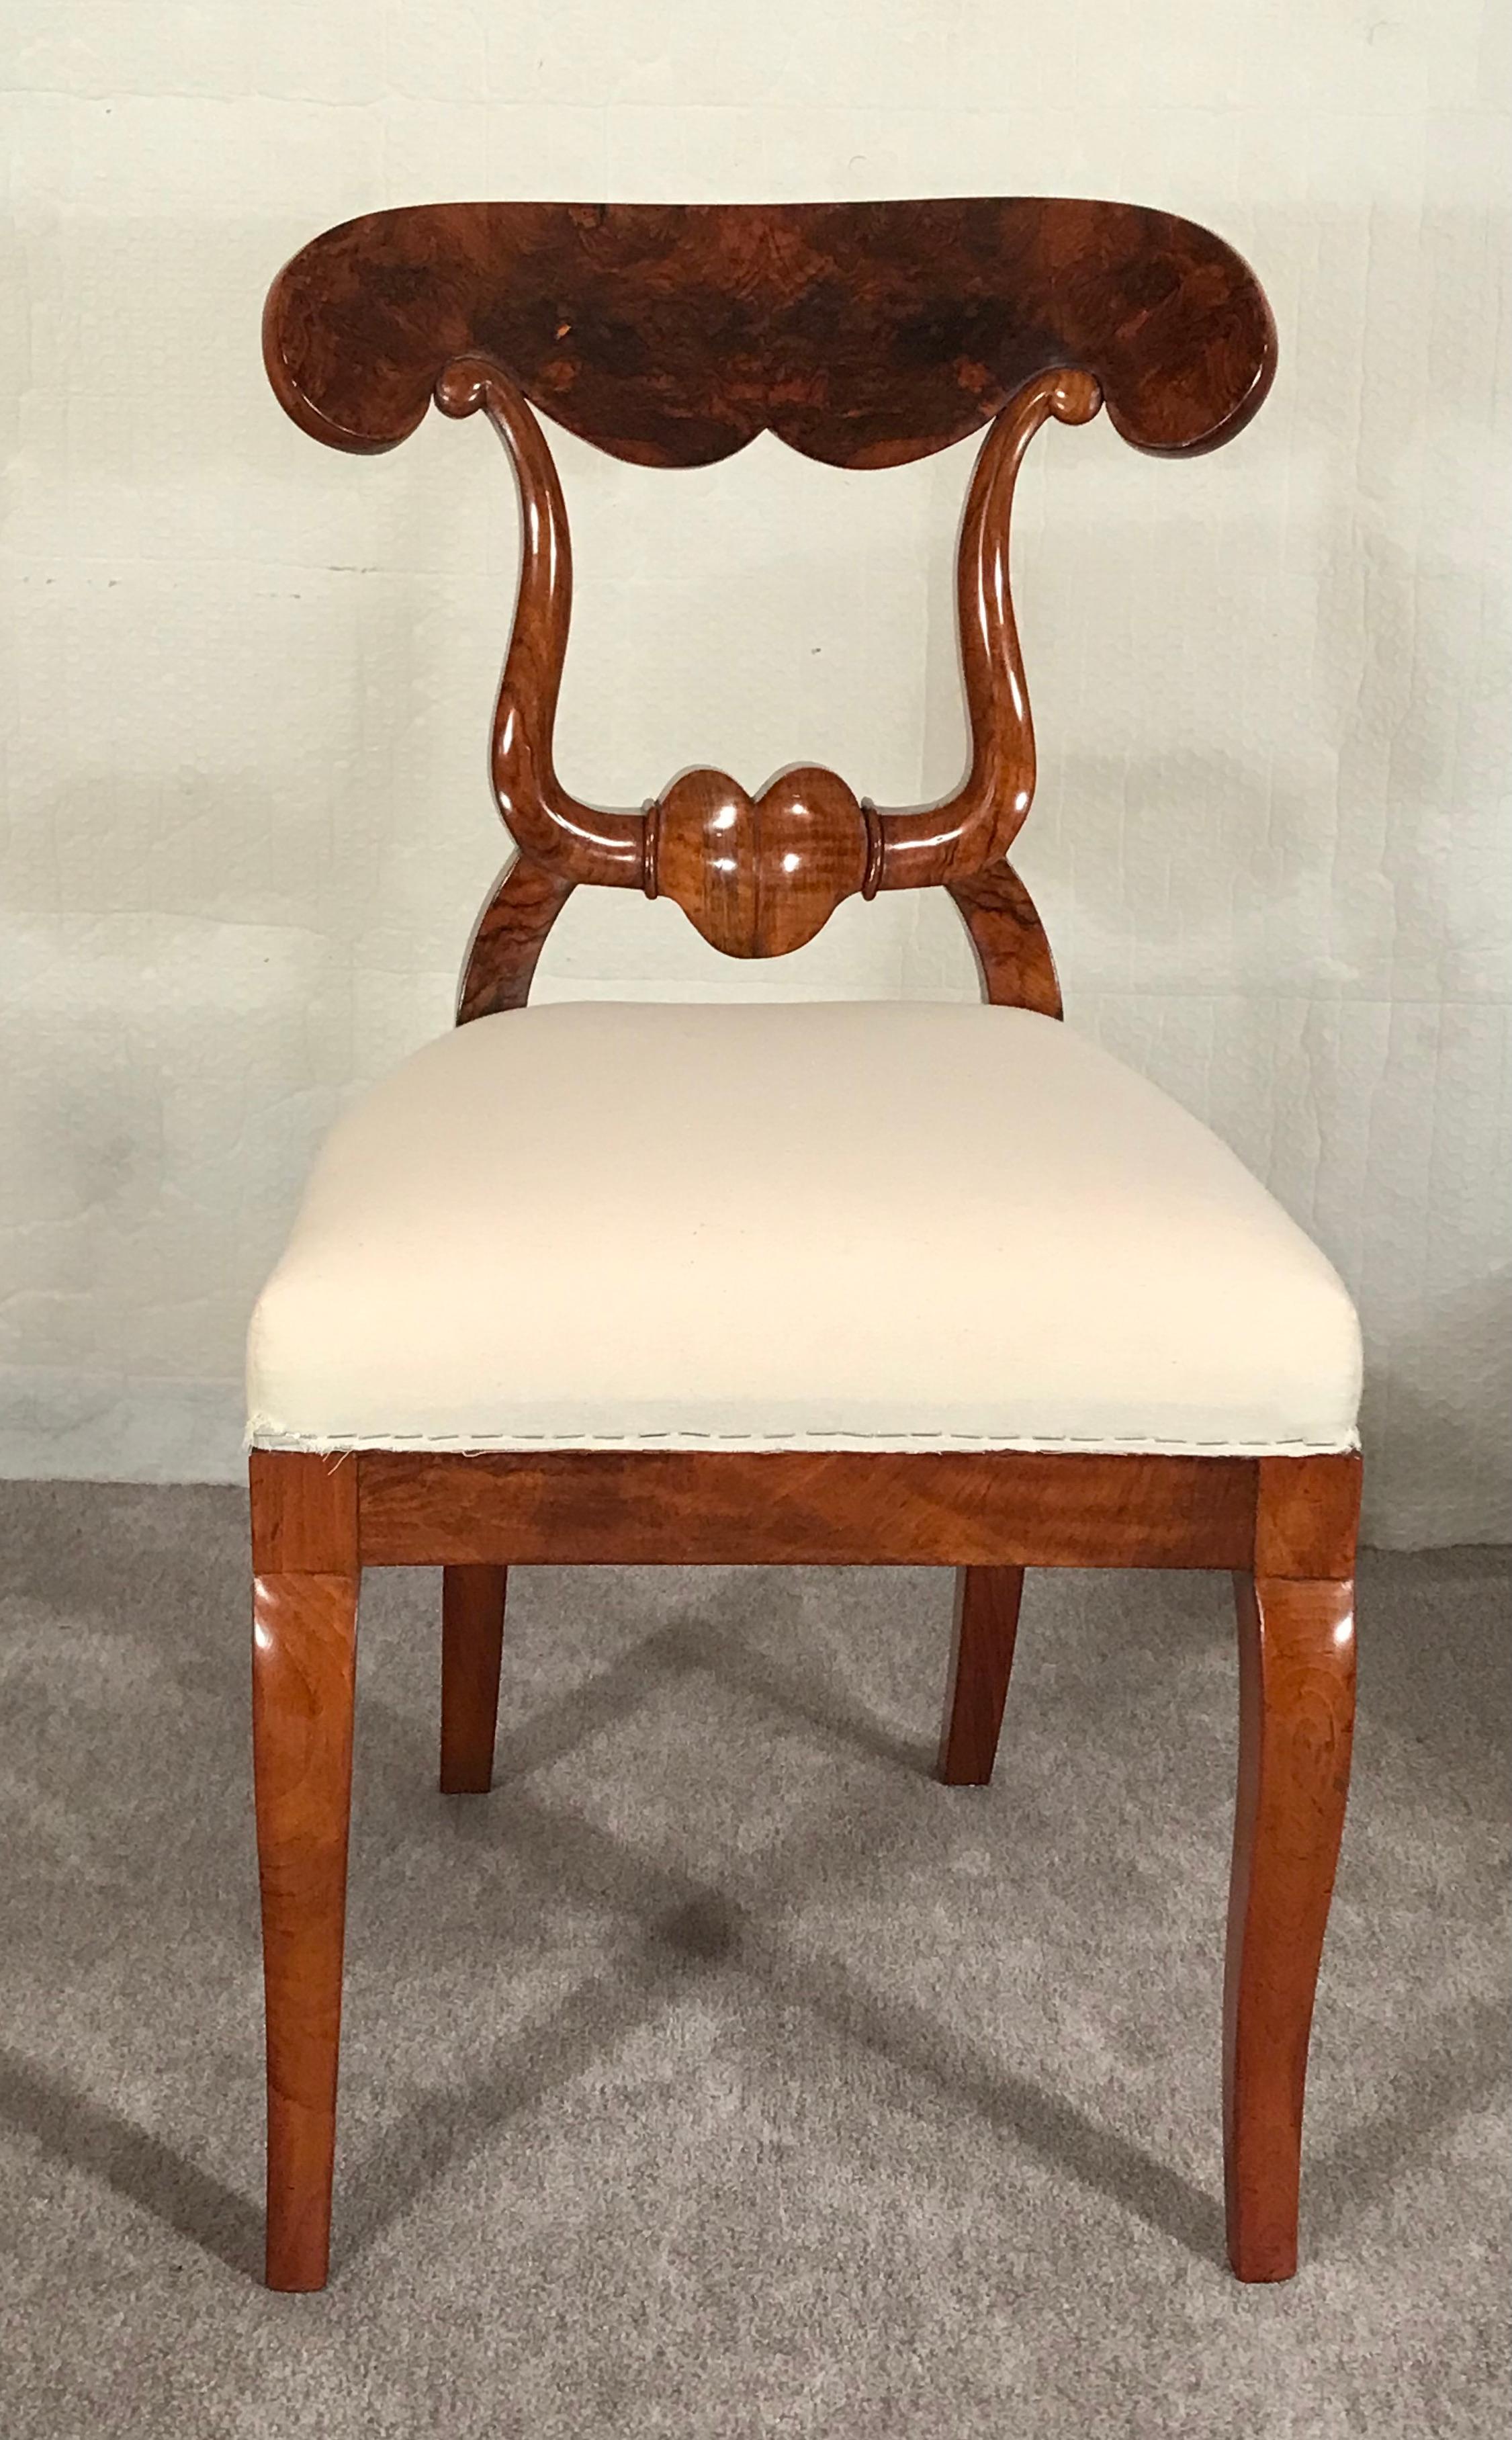 Early 19th Century Set of 10 Biedermeier Chairs, South Germany 1820-30, Walnut